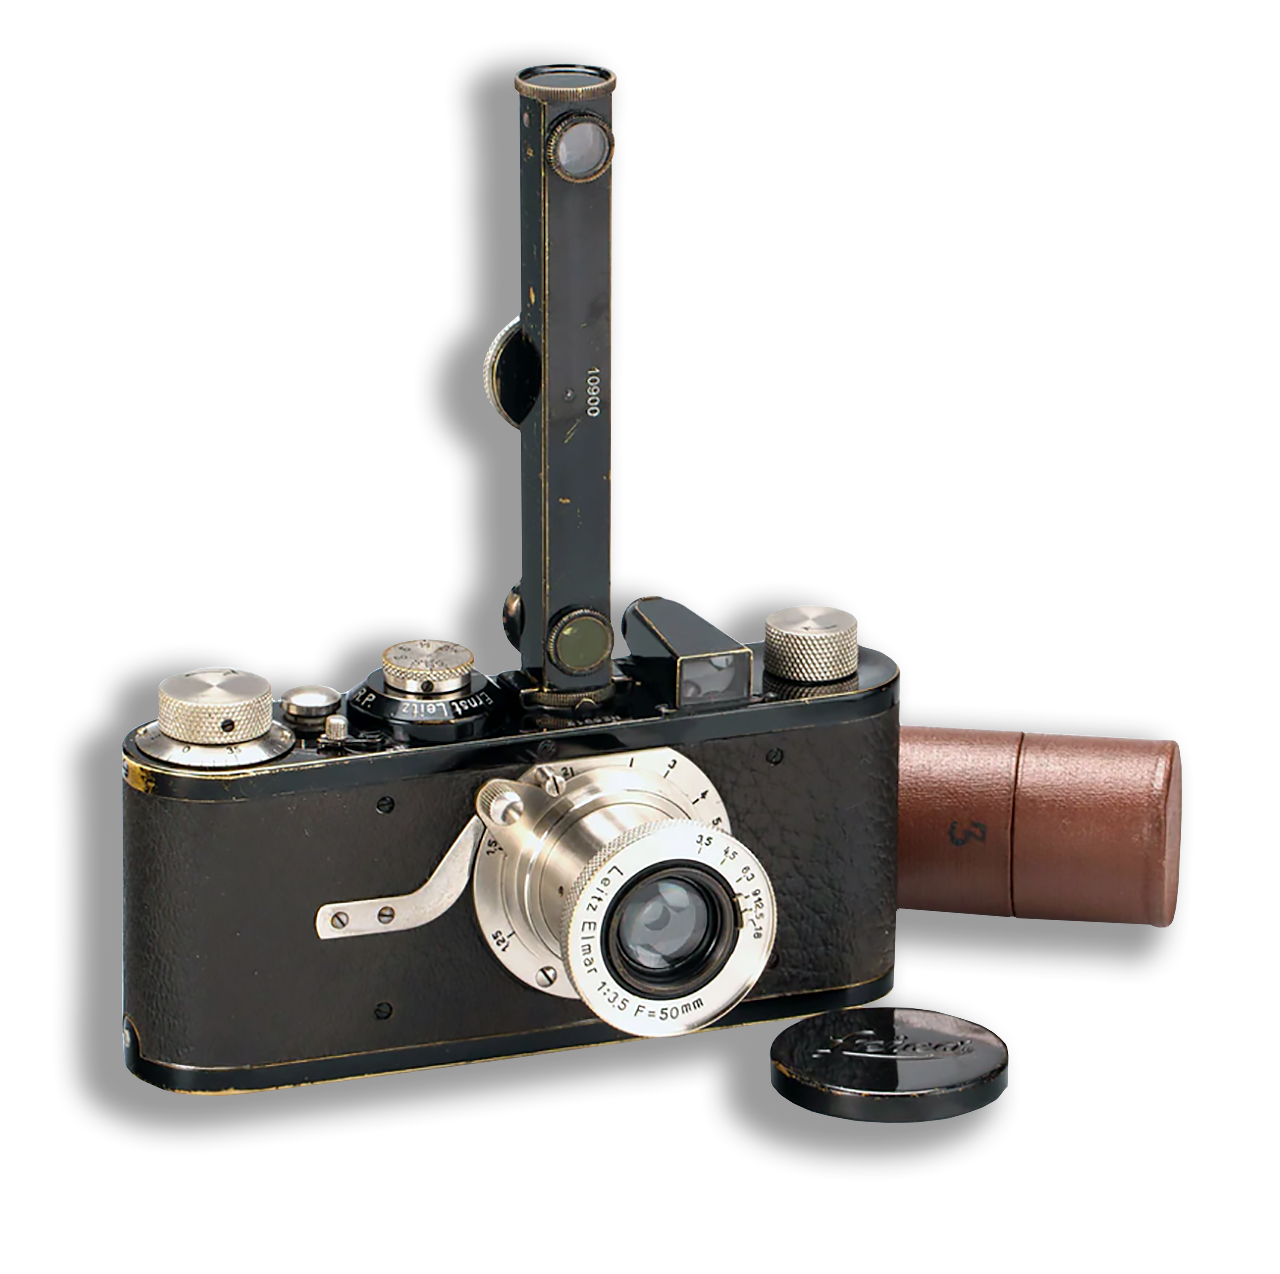 1280x1274px-Leica-1-mit-Entfernungsmesser-vWA24